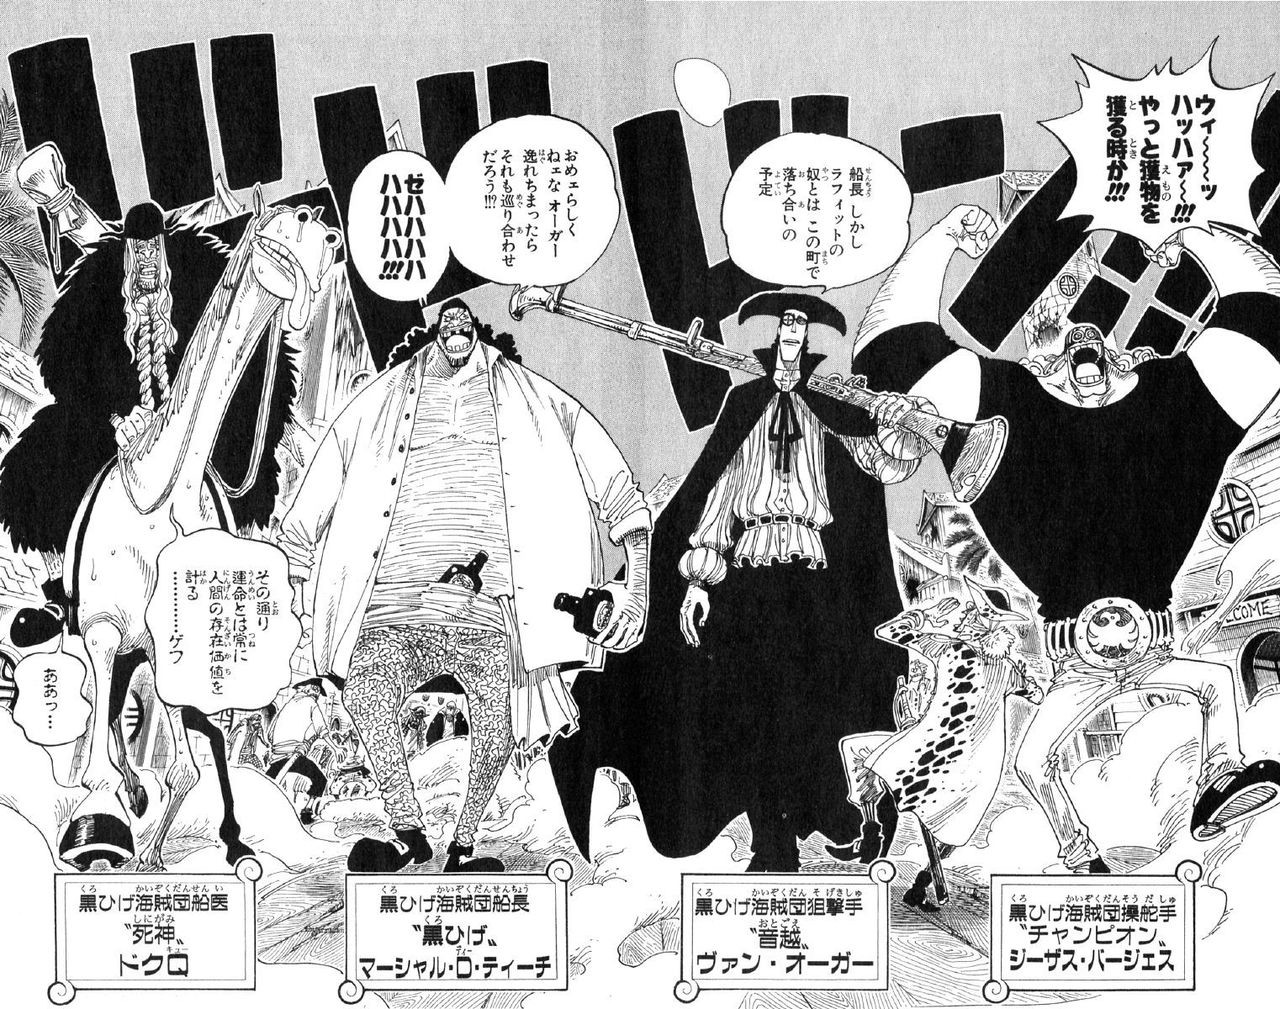 [Breaking news] Blackbeard Pirates was a body group